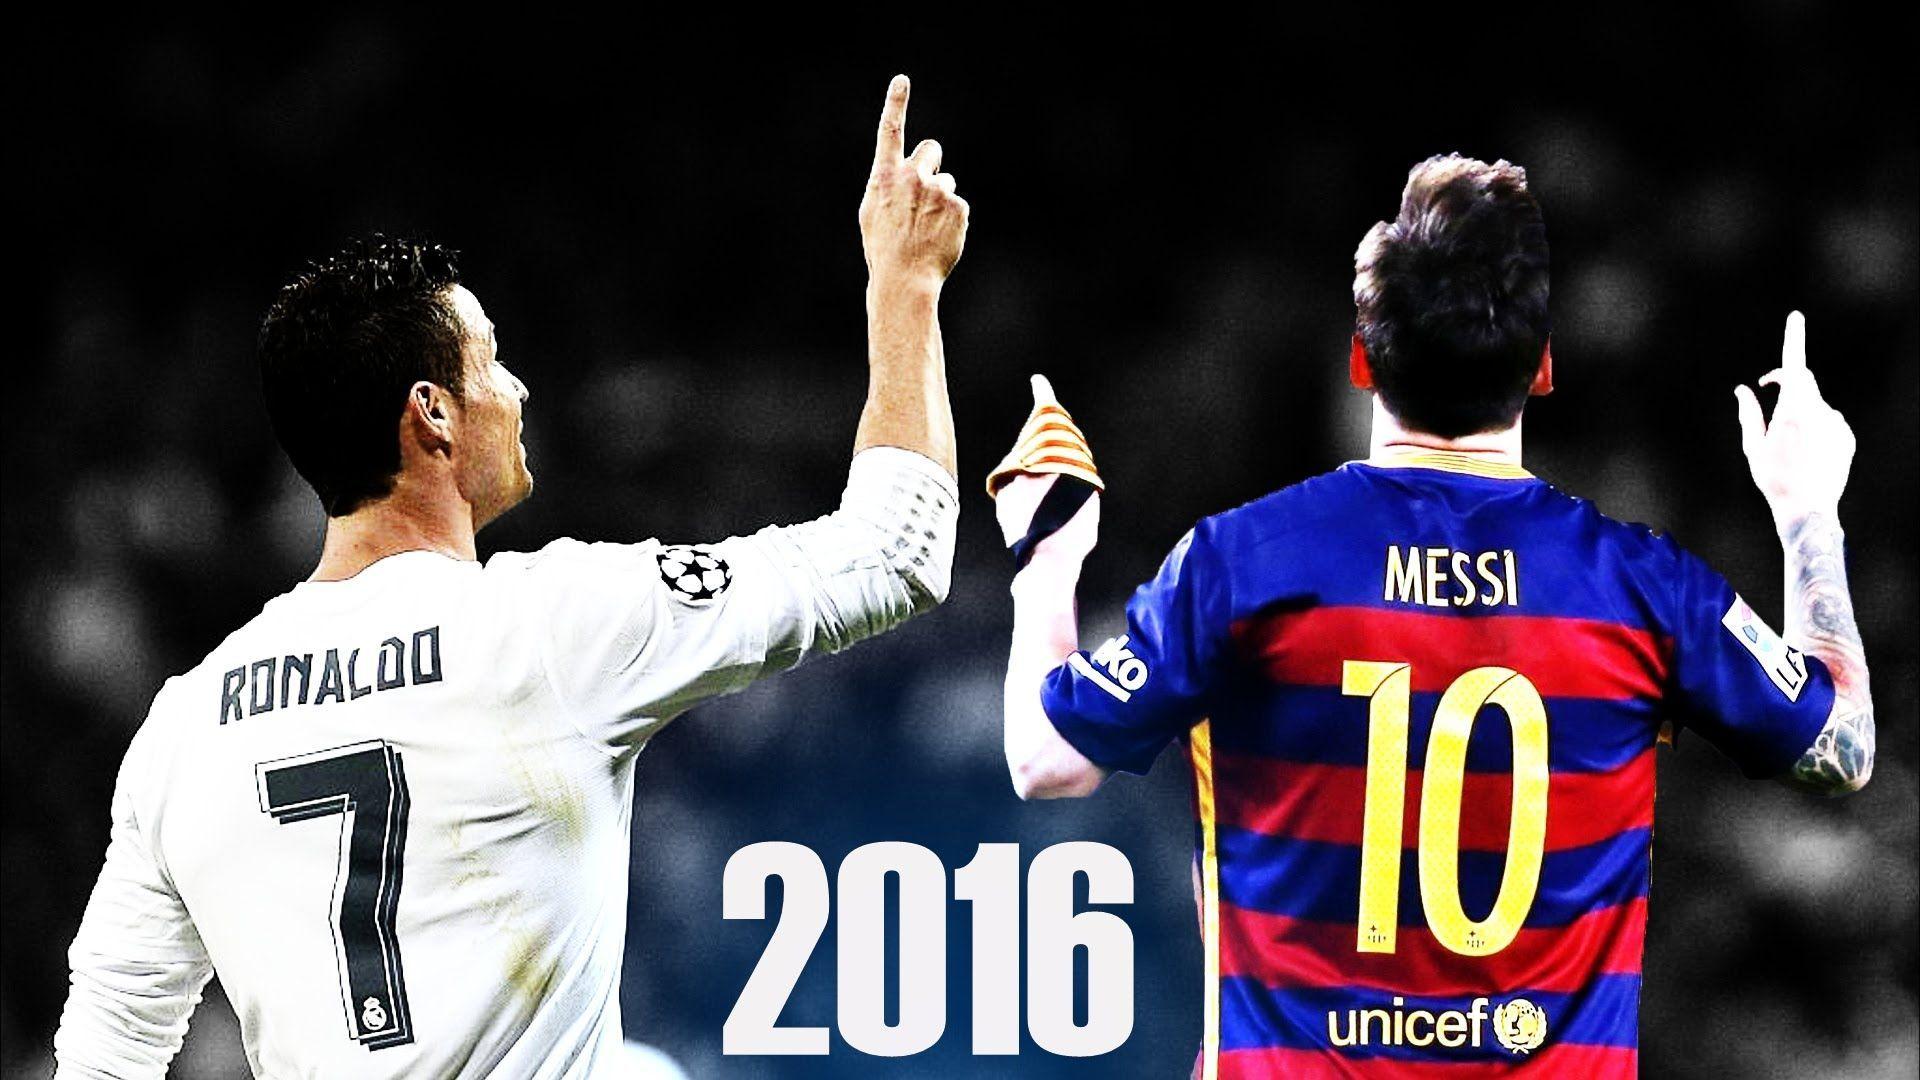 Lionel Messi Vs Cristiano Ronaldo Goals & Skills Show